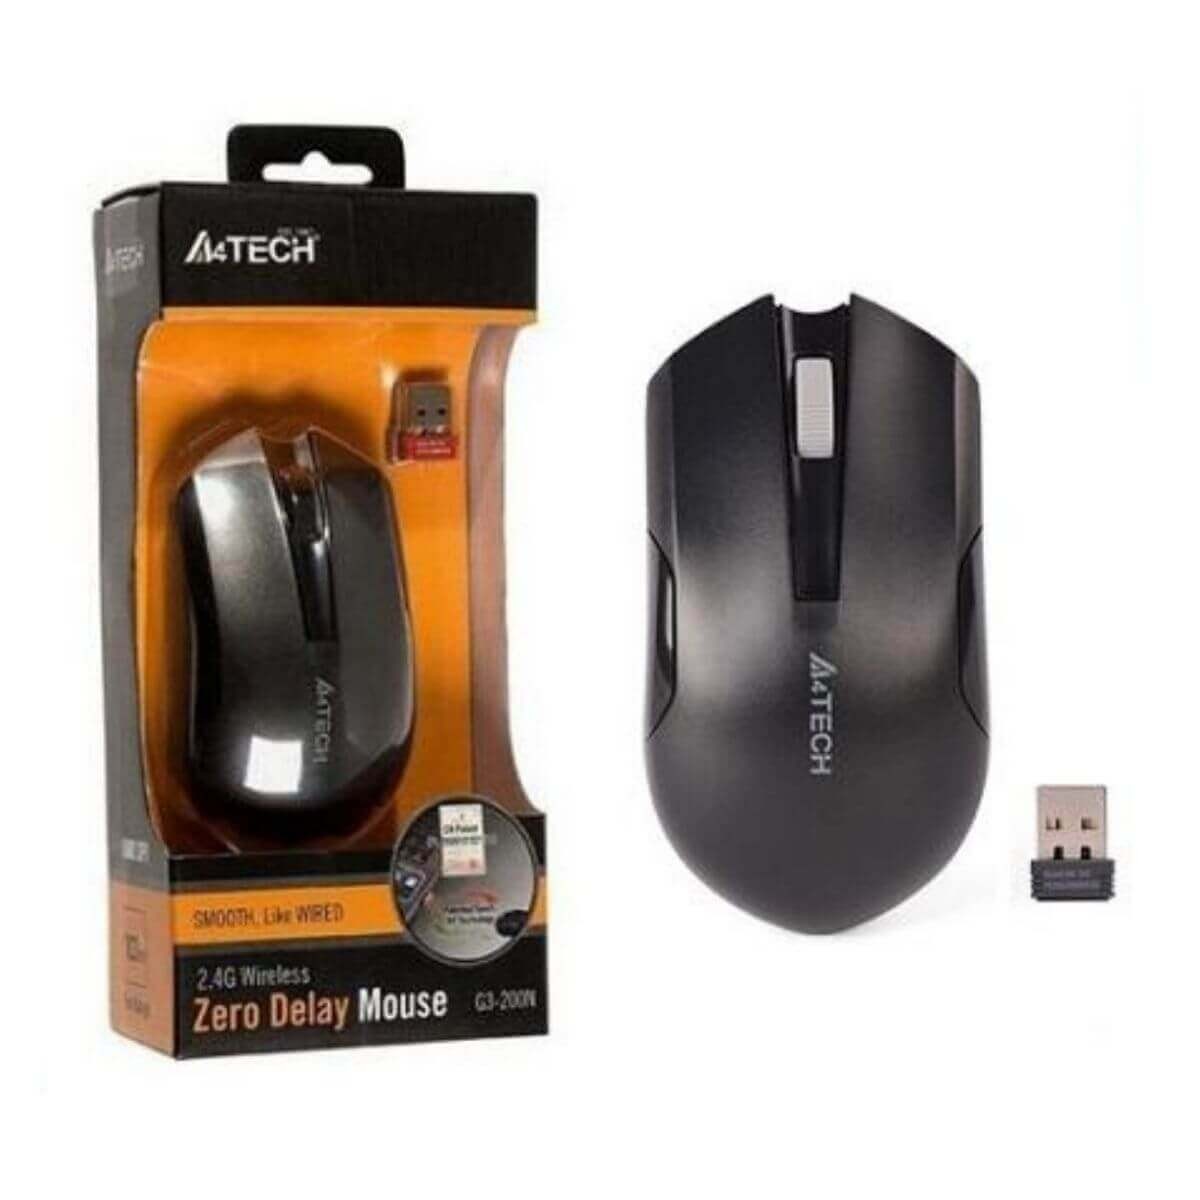 A4tech {Original} Wireless Mouse G3-200N BD